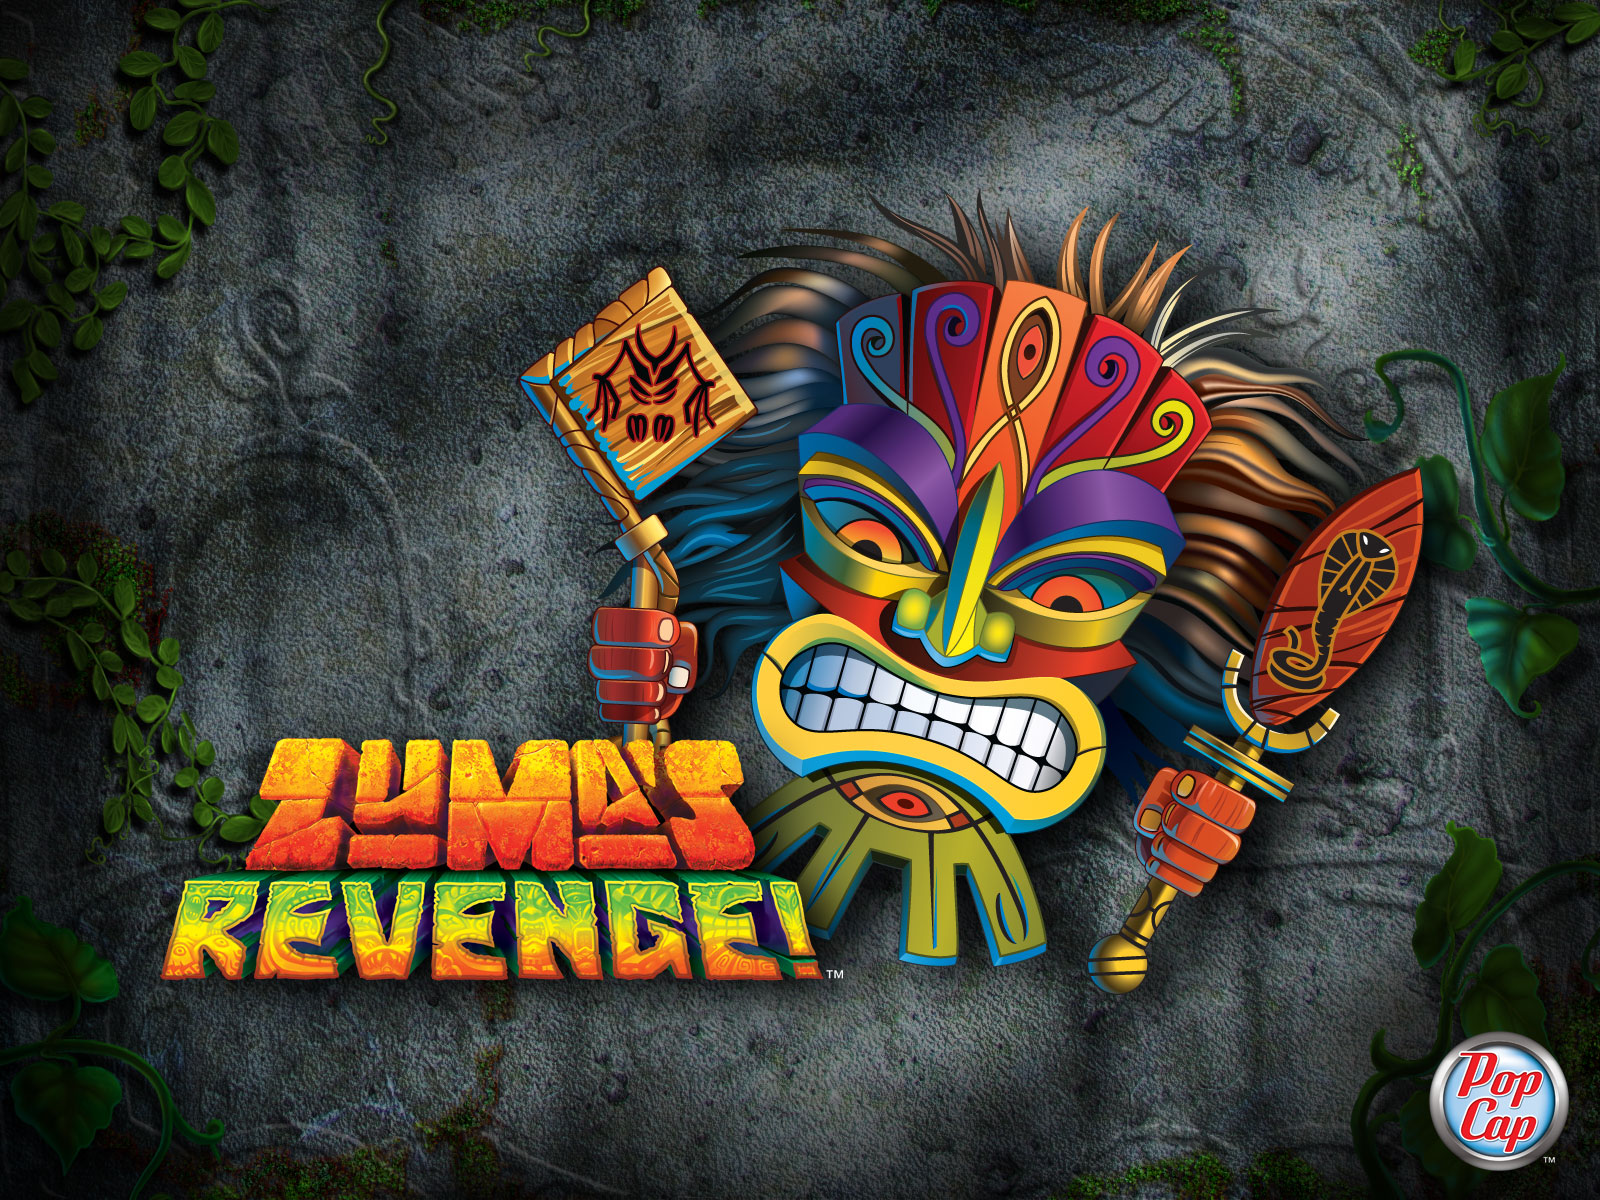 Zuma revenge deluxe free download